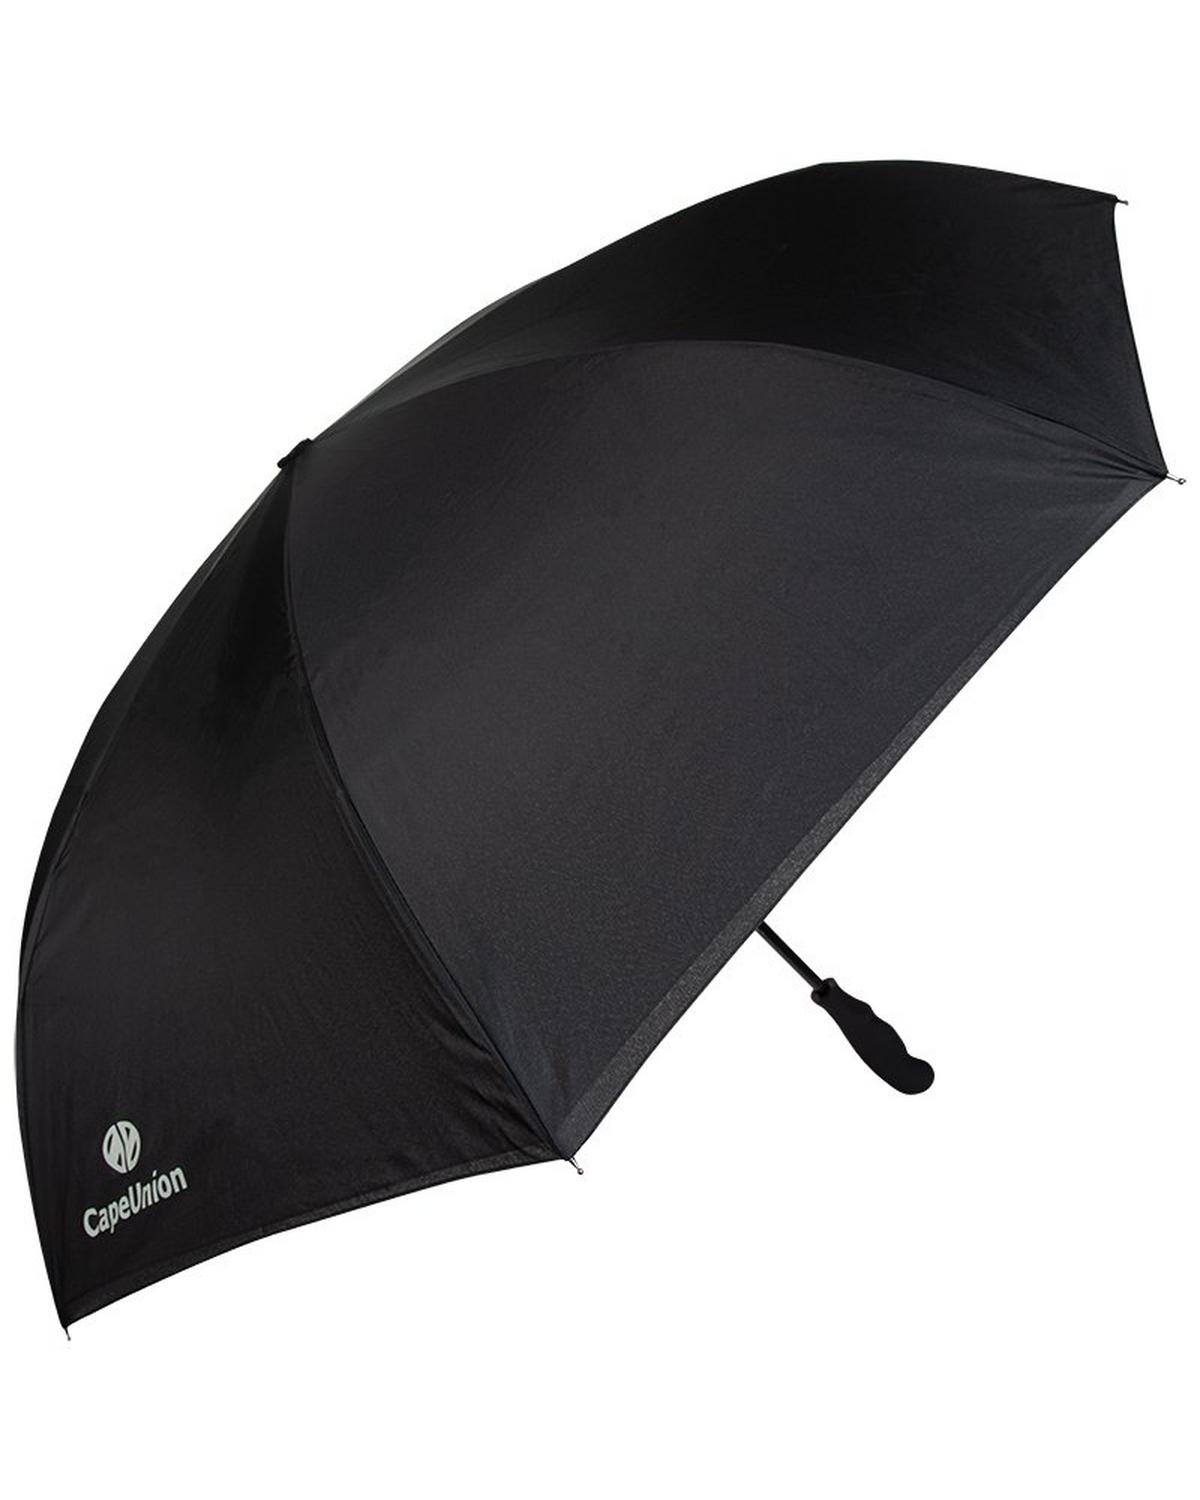 Cape Union Reversible Auto Open Umbrella -  Black /Navy